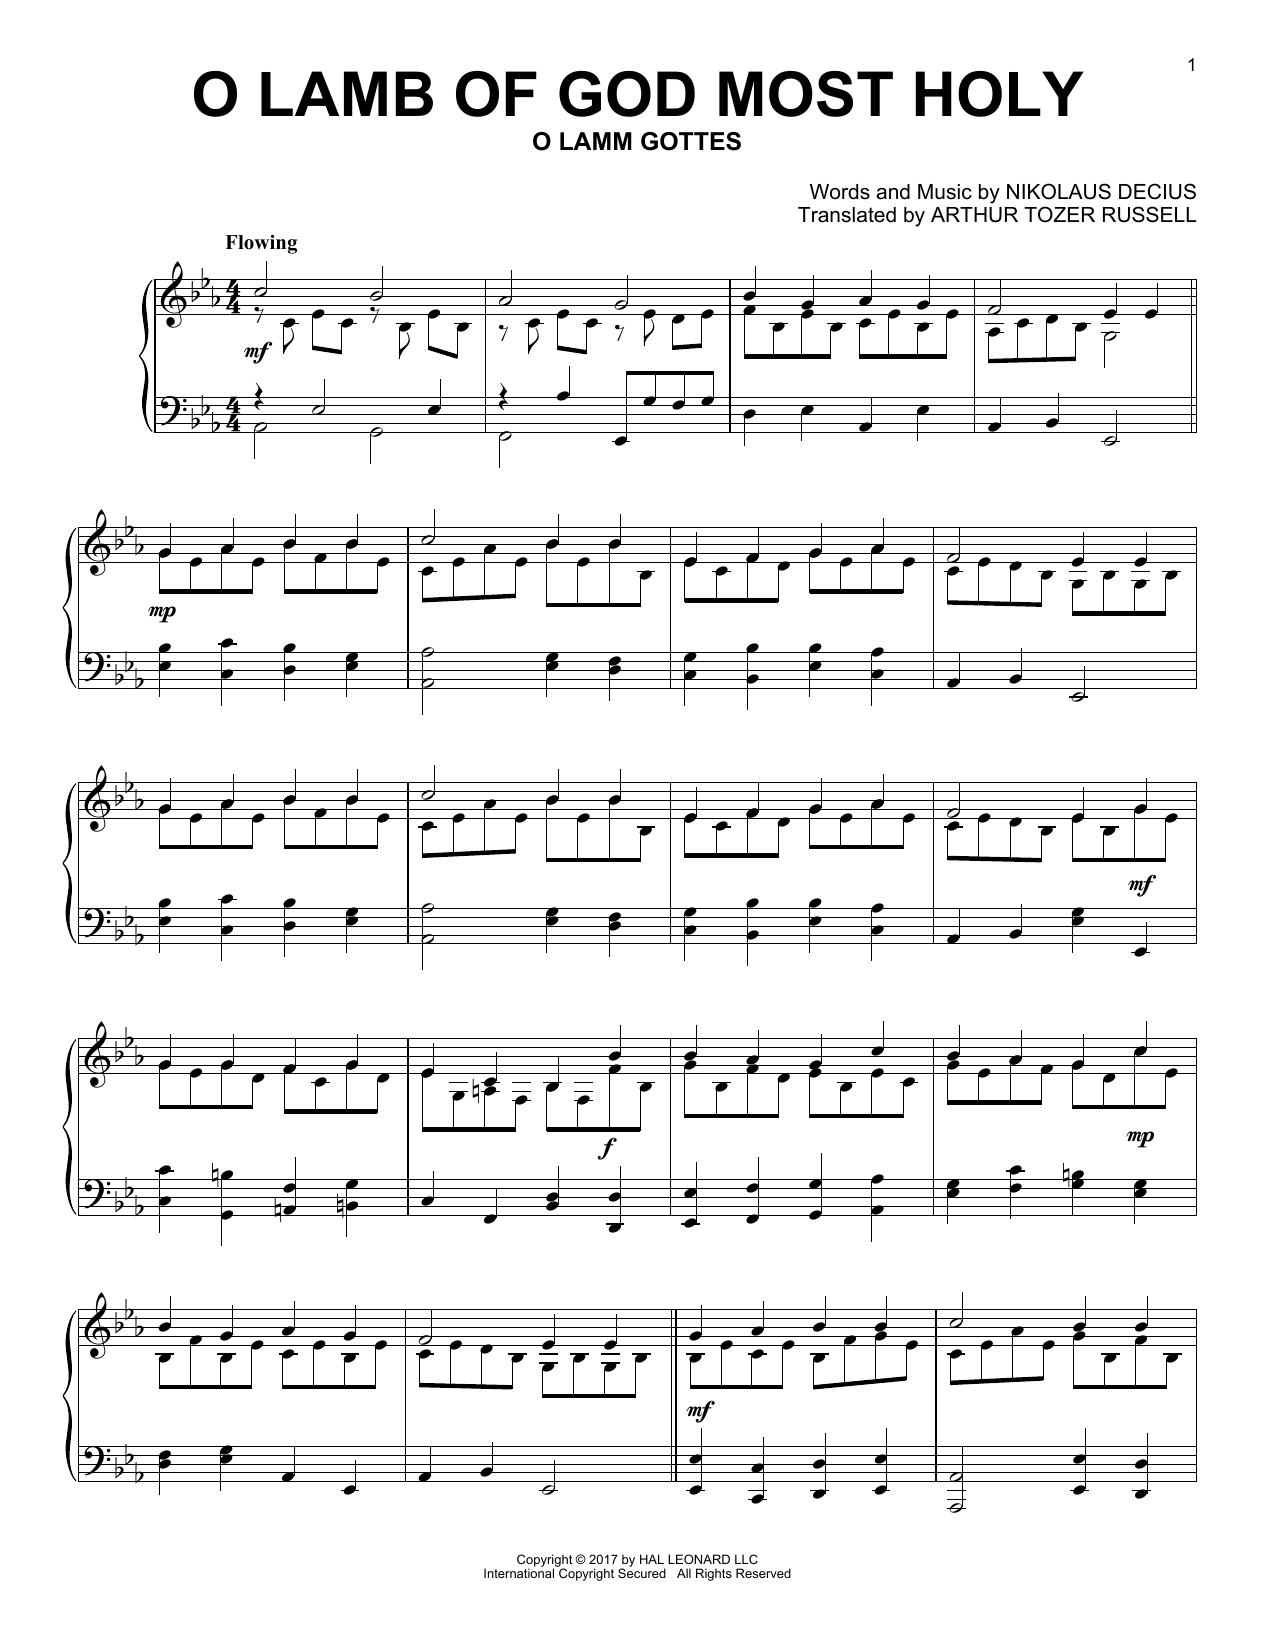 Nikolaus Decius O Lamb Of God Most Holy Sheet Music Notes & Chords for Piano - Download or Print PDF